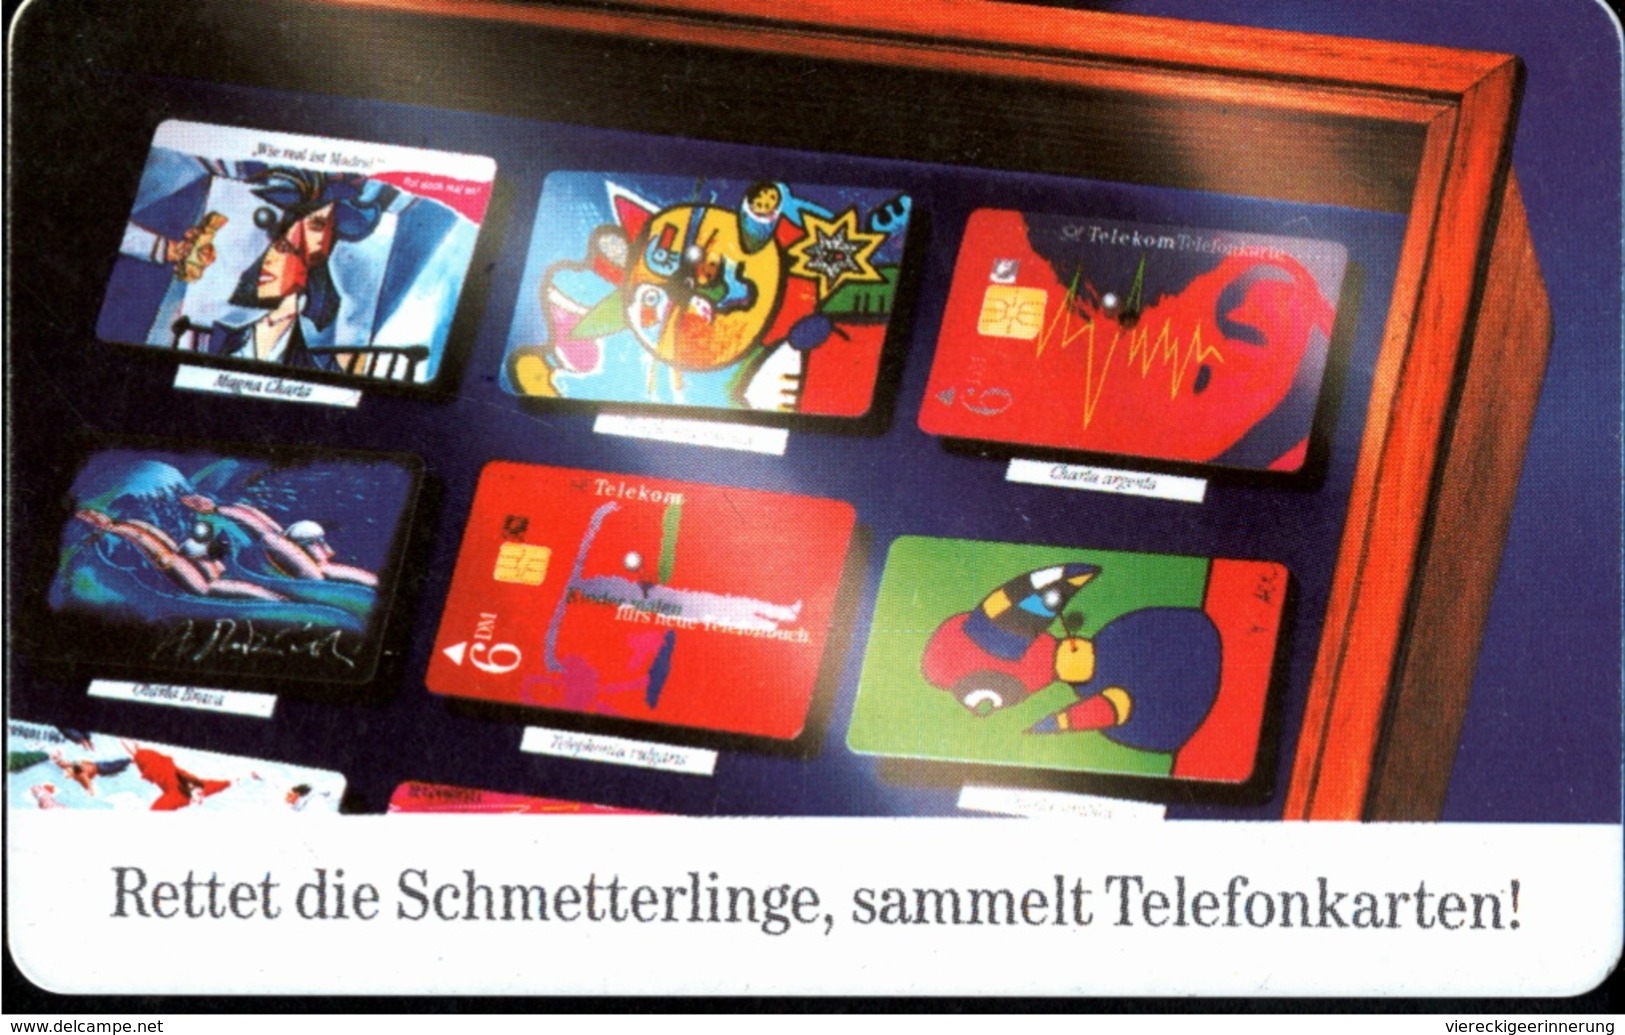 ! Telefonkarte, Telecarte, Phonecard, 1996, S PD, Sammelt Telefonkarten, Schmetterlinge, Germany - P & PD-Serie : Sportello Della D. Telekom